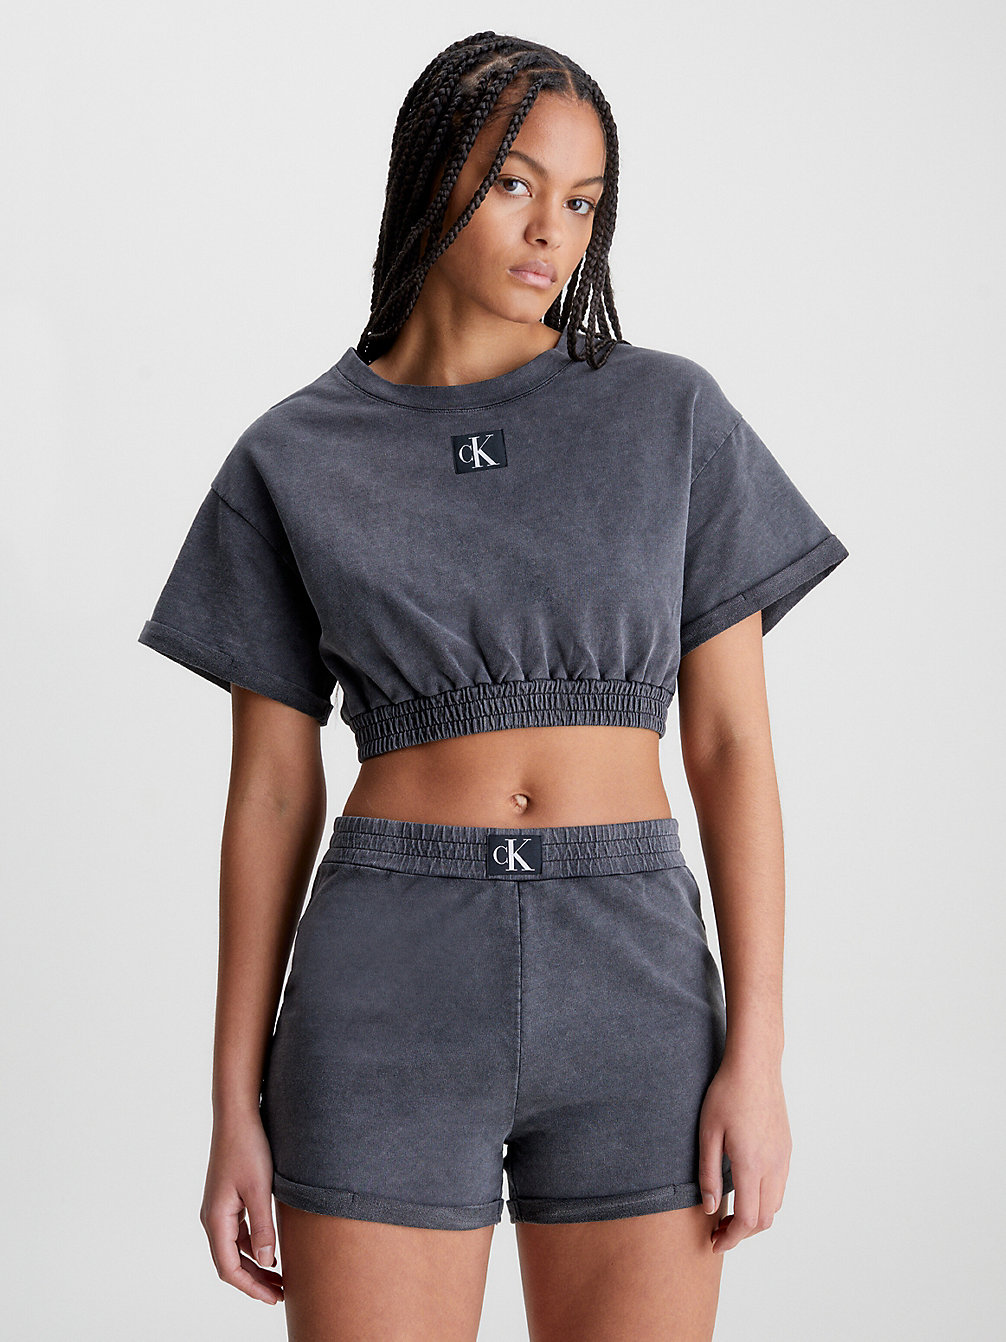 PVH BLACK Cropped Beach T-Shirt - CK Authentic undefined women Calvin Klein